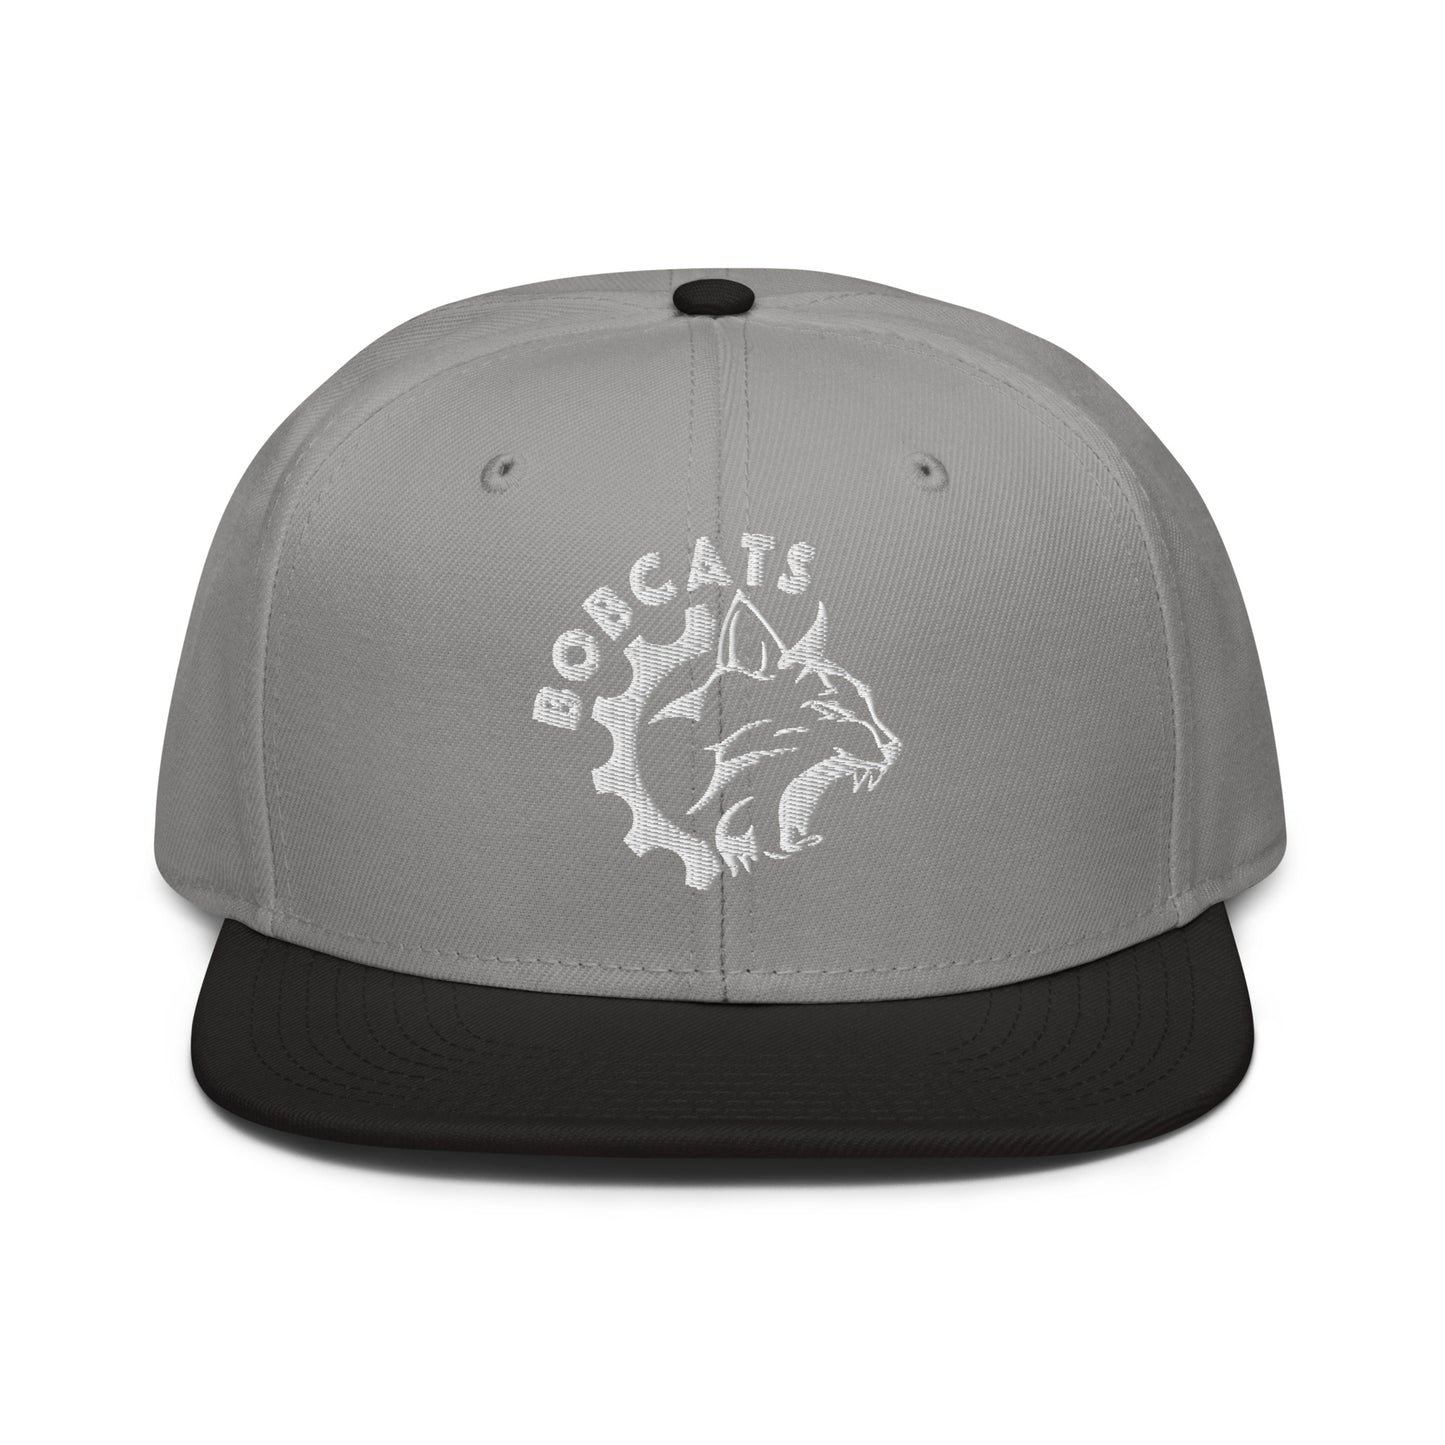 Bobcats Snapback Flat Hat